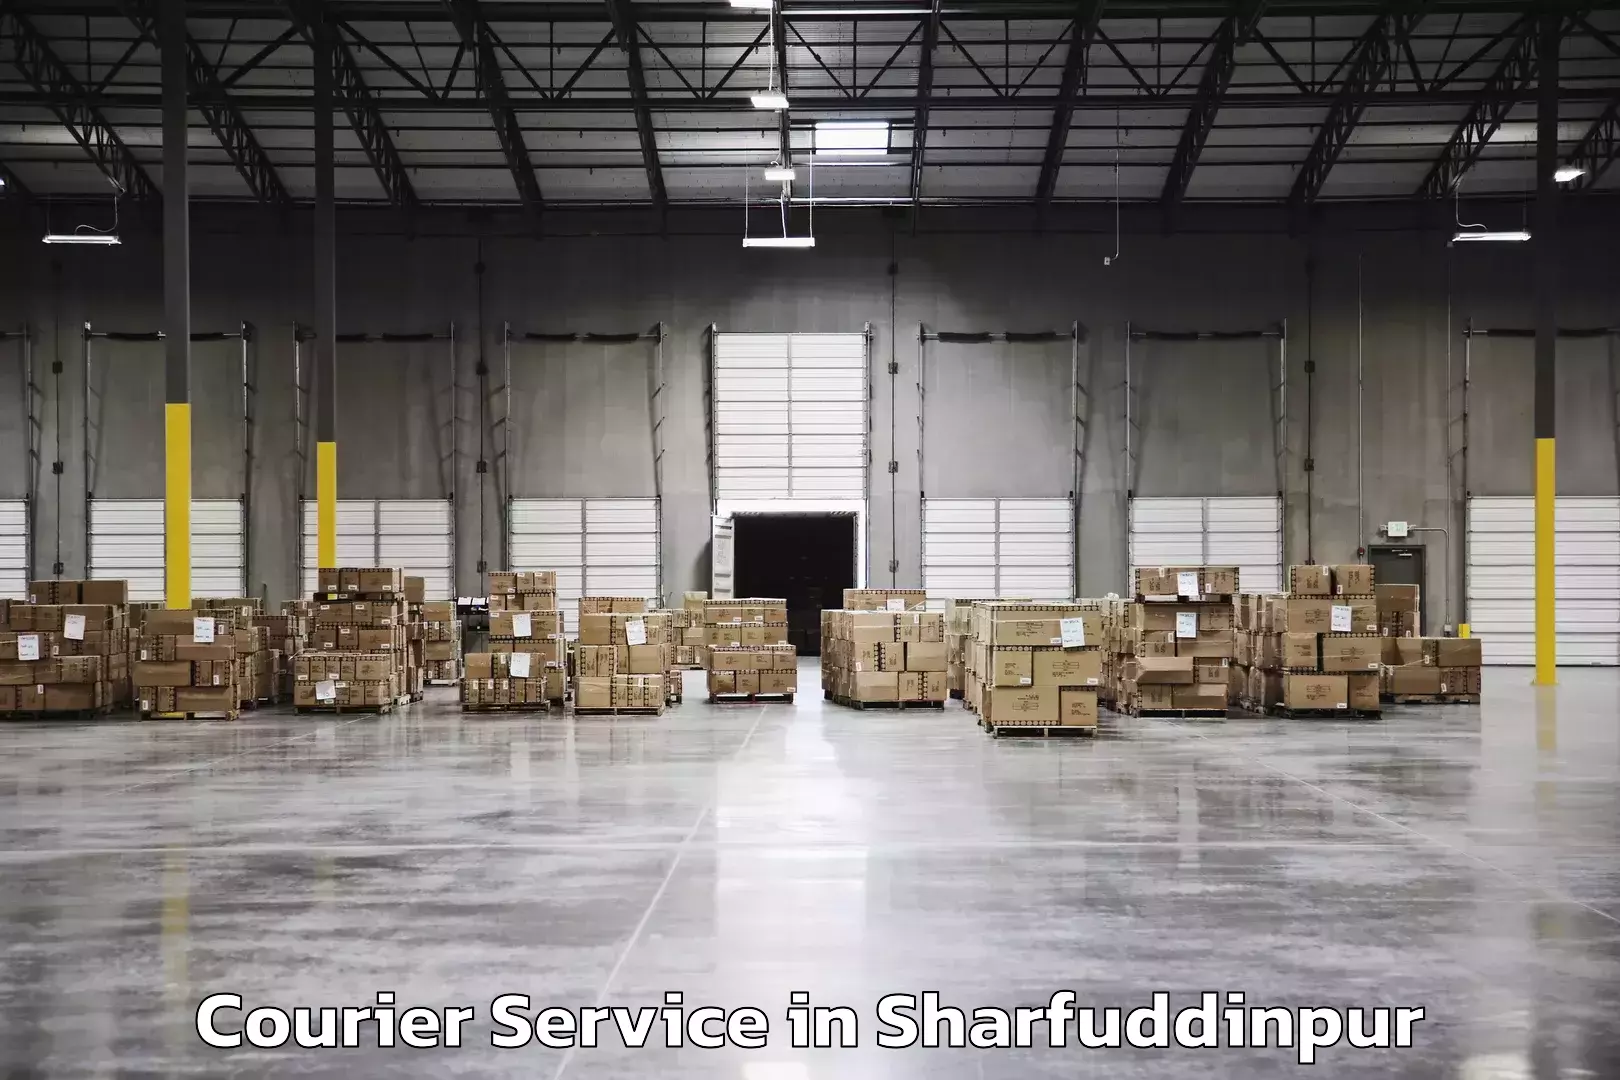 Smart shipping technology in Sharfuddinpur